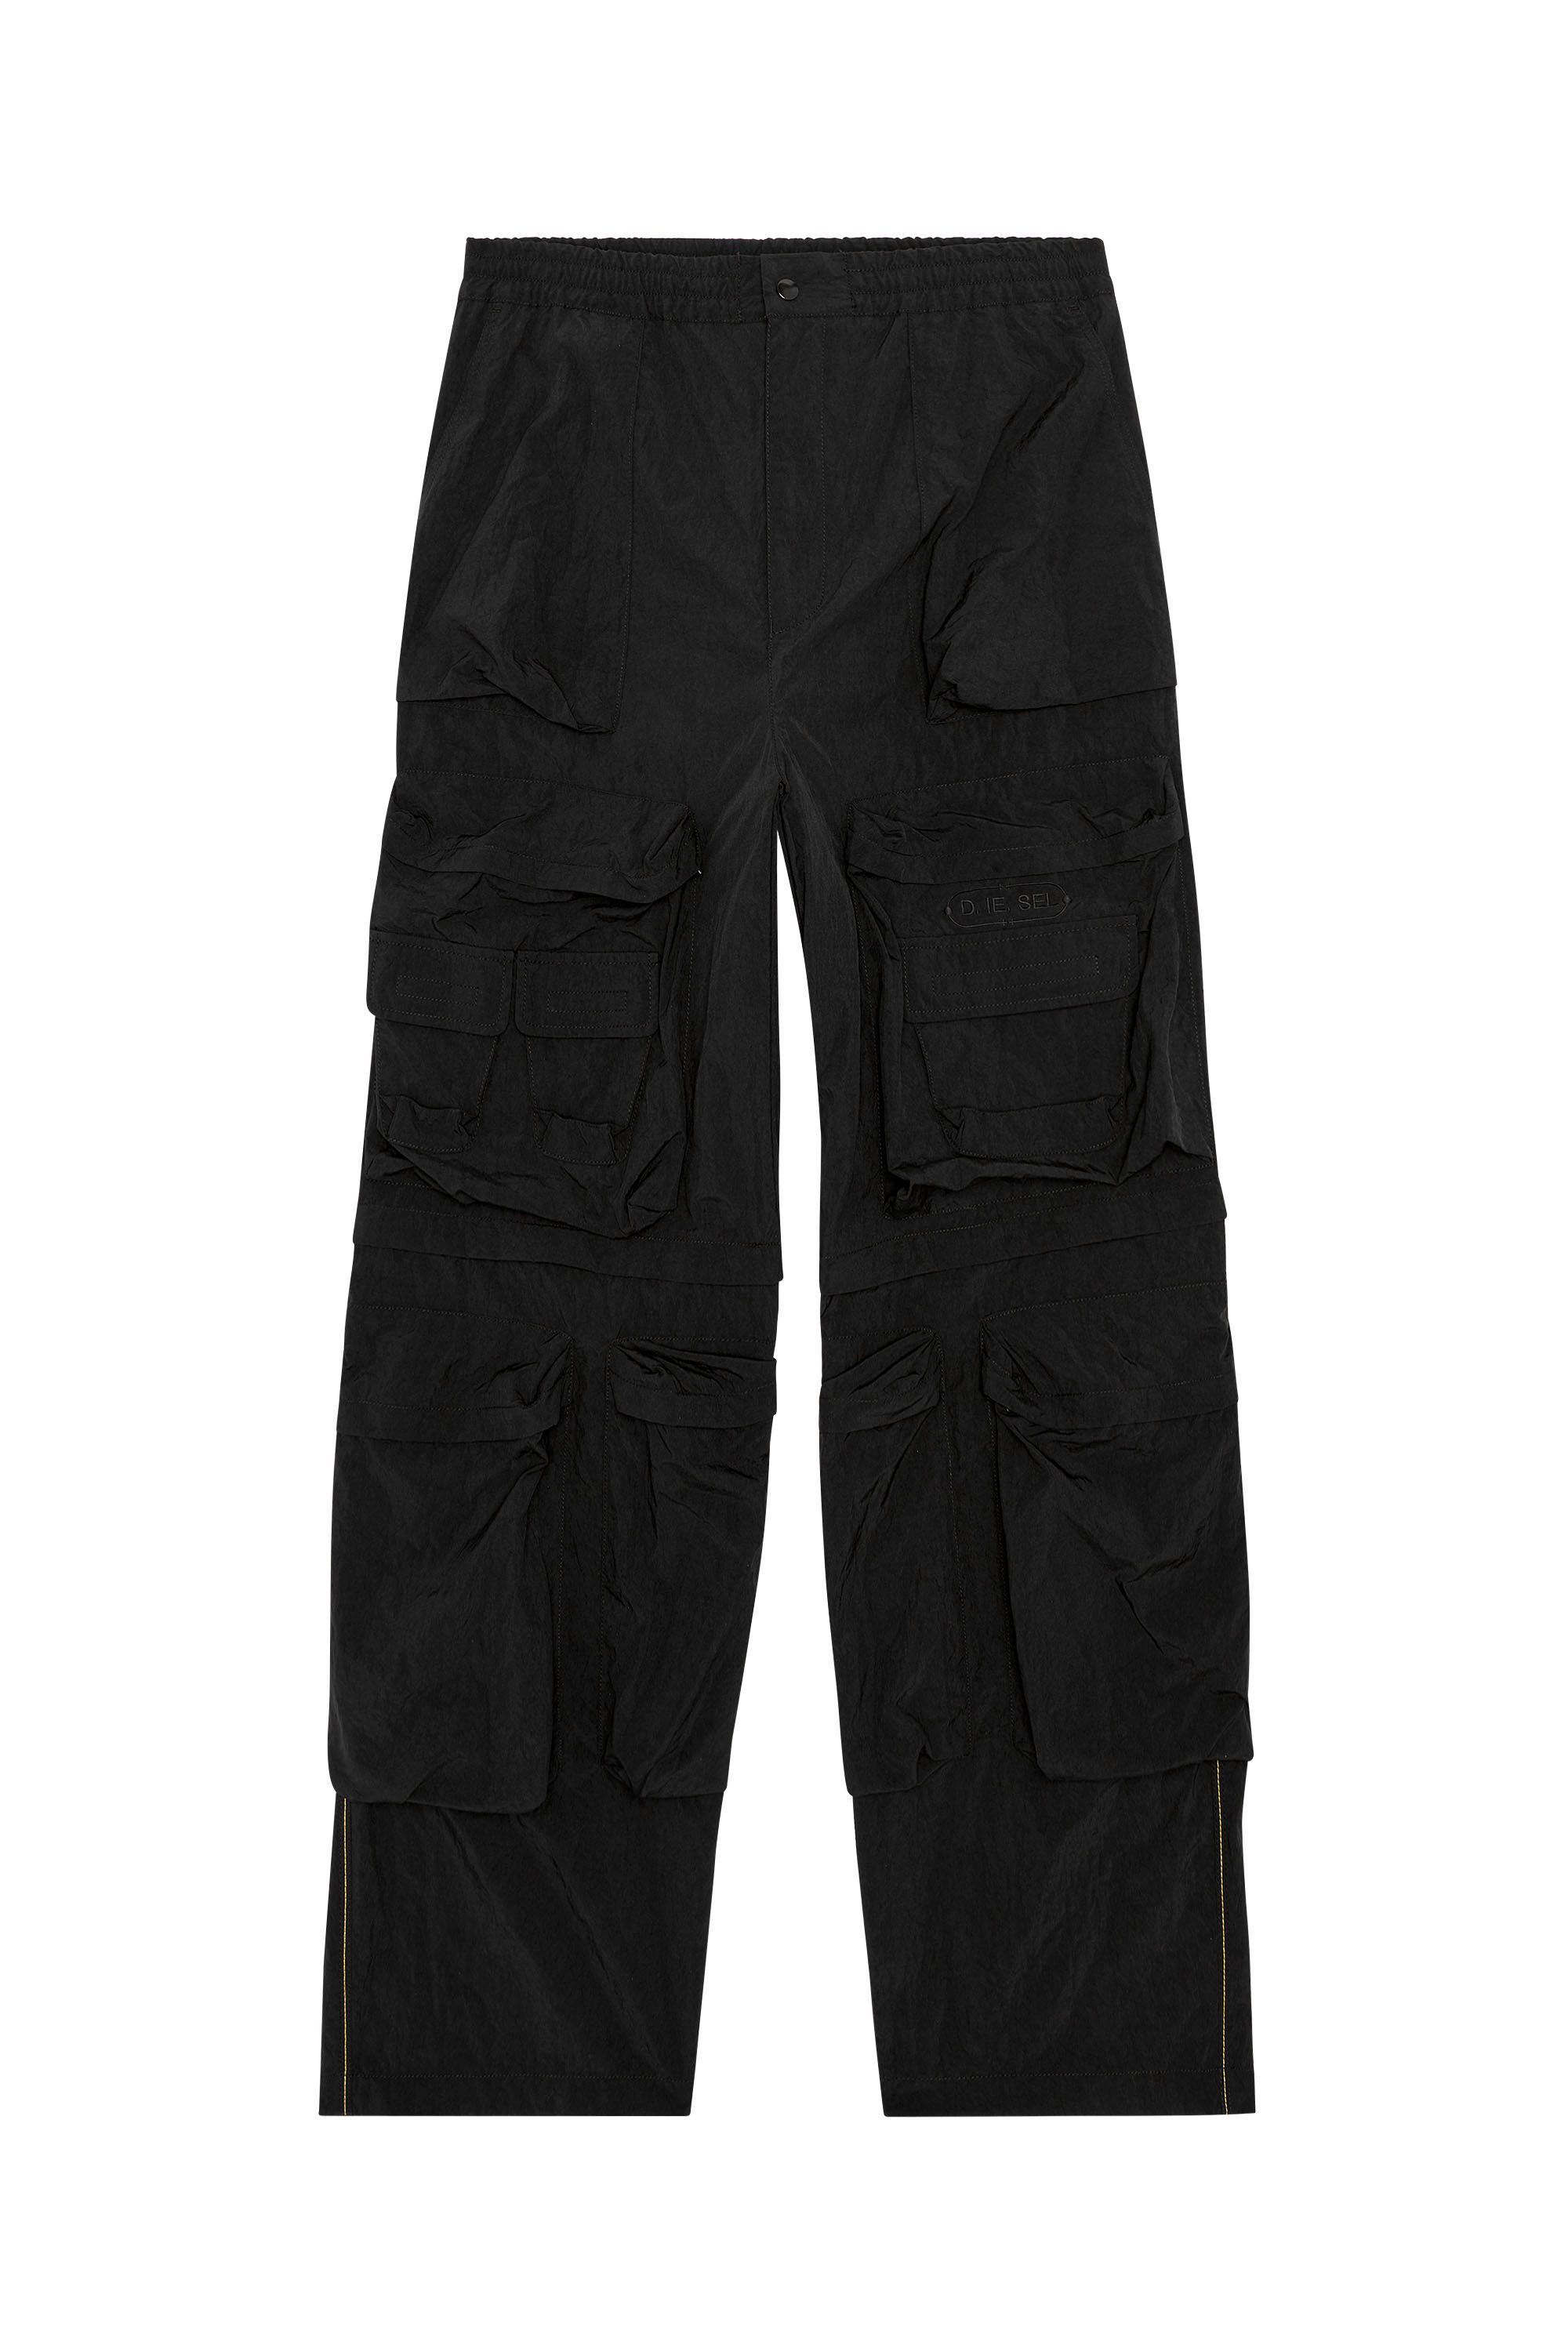 Men's cargo pants MARCUS black - Billtone